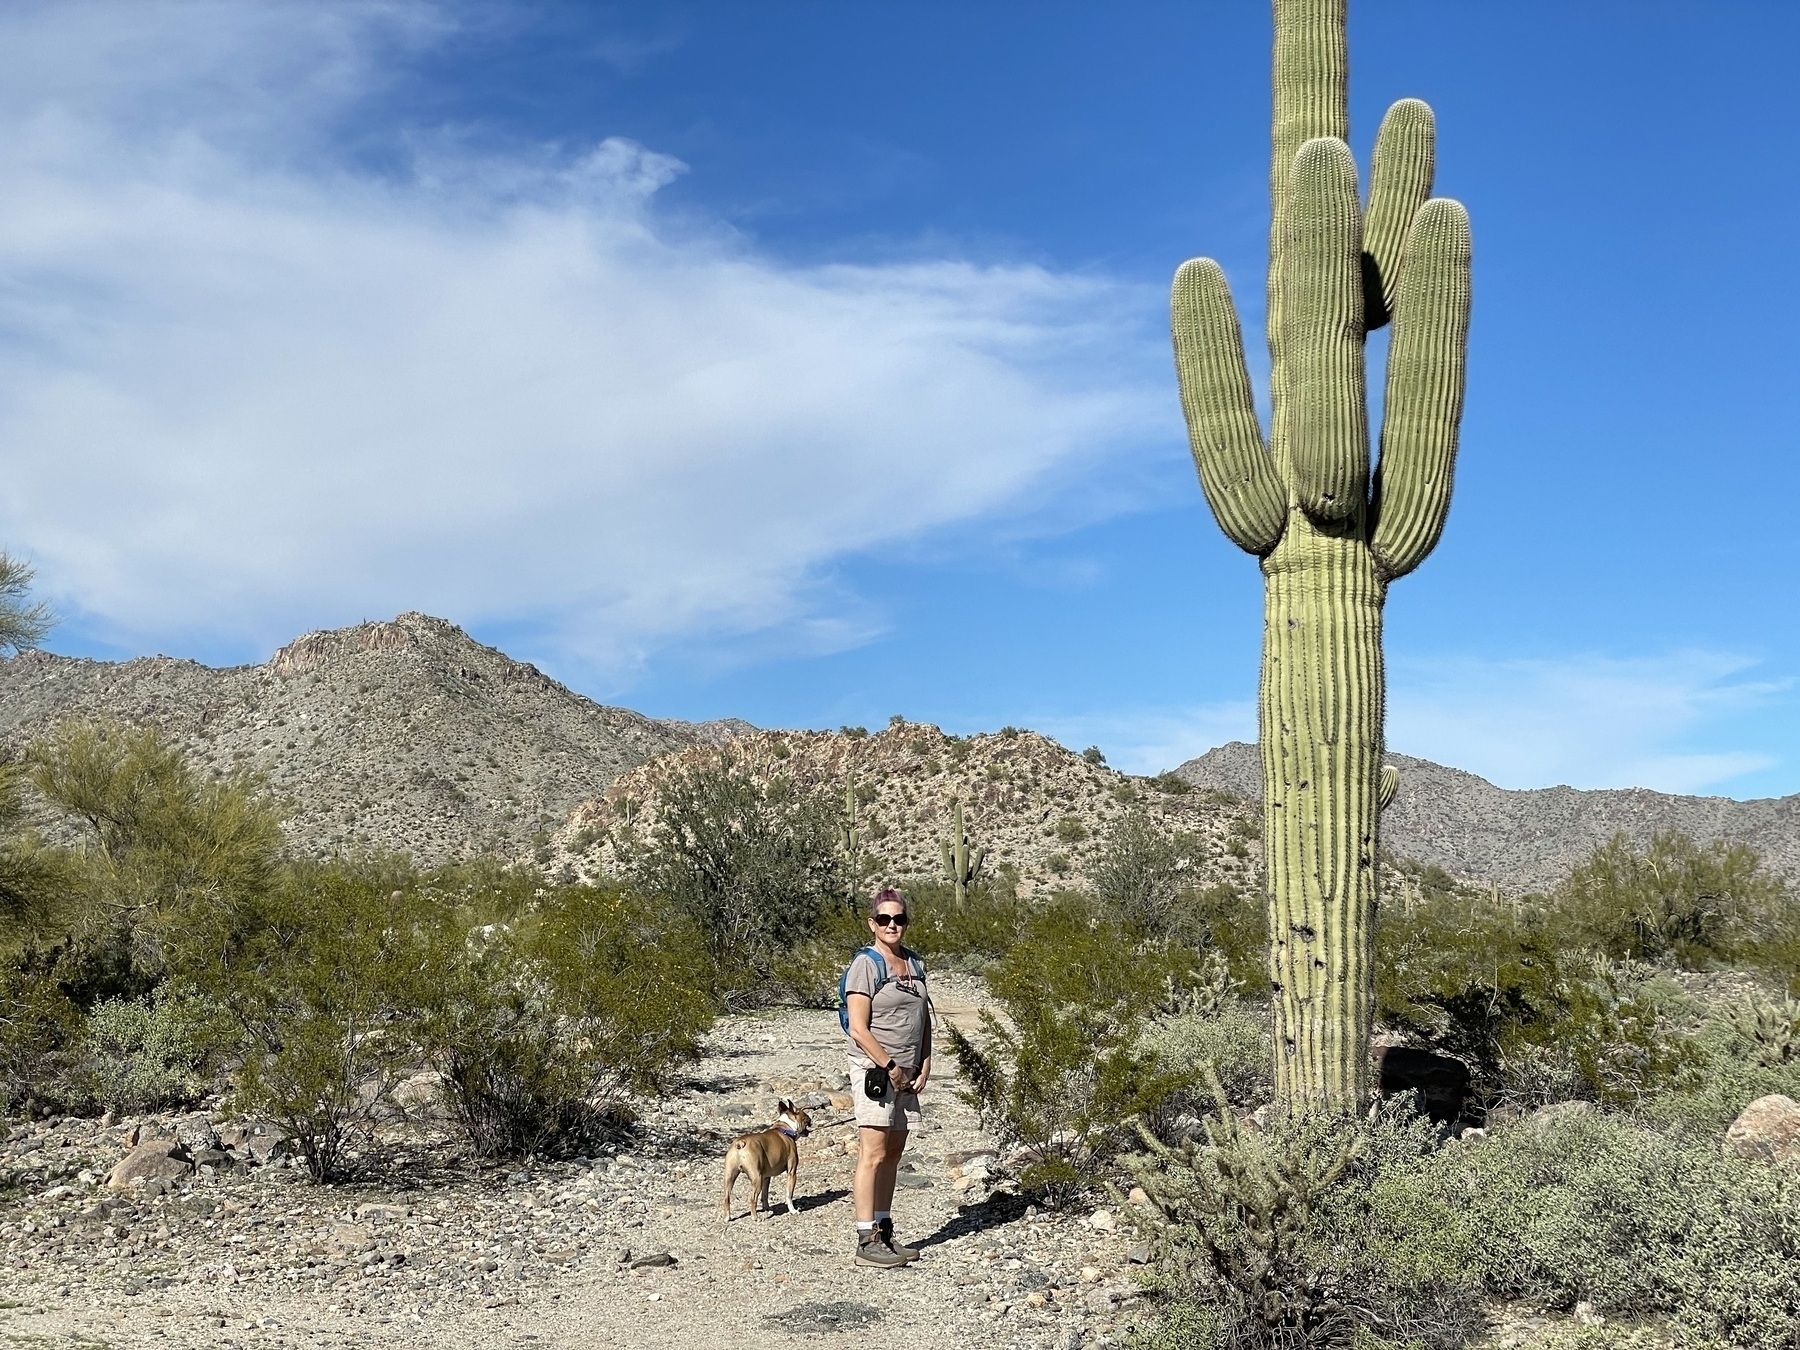 Saguaro Cactus along a hiking trail in Arizona